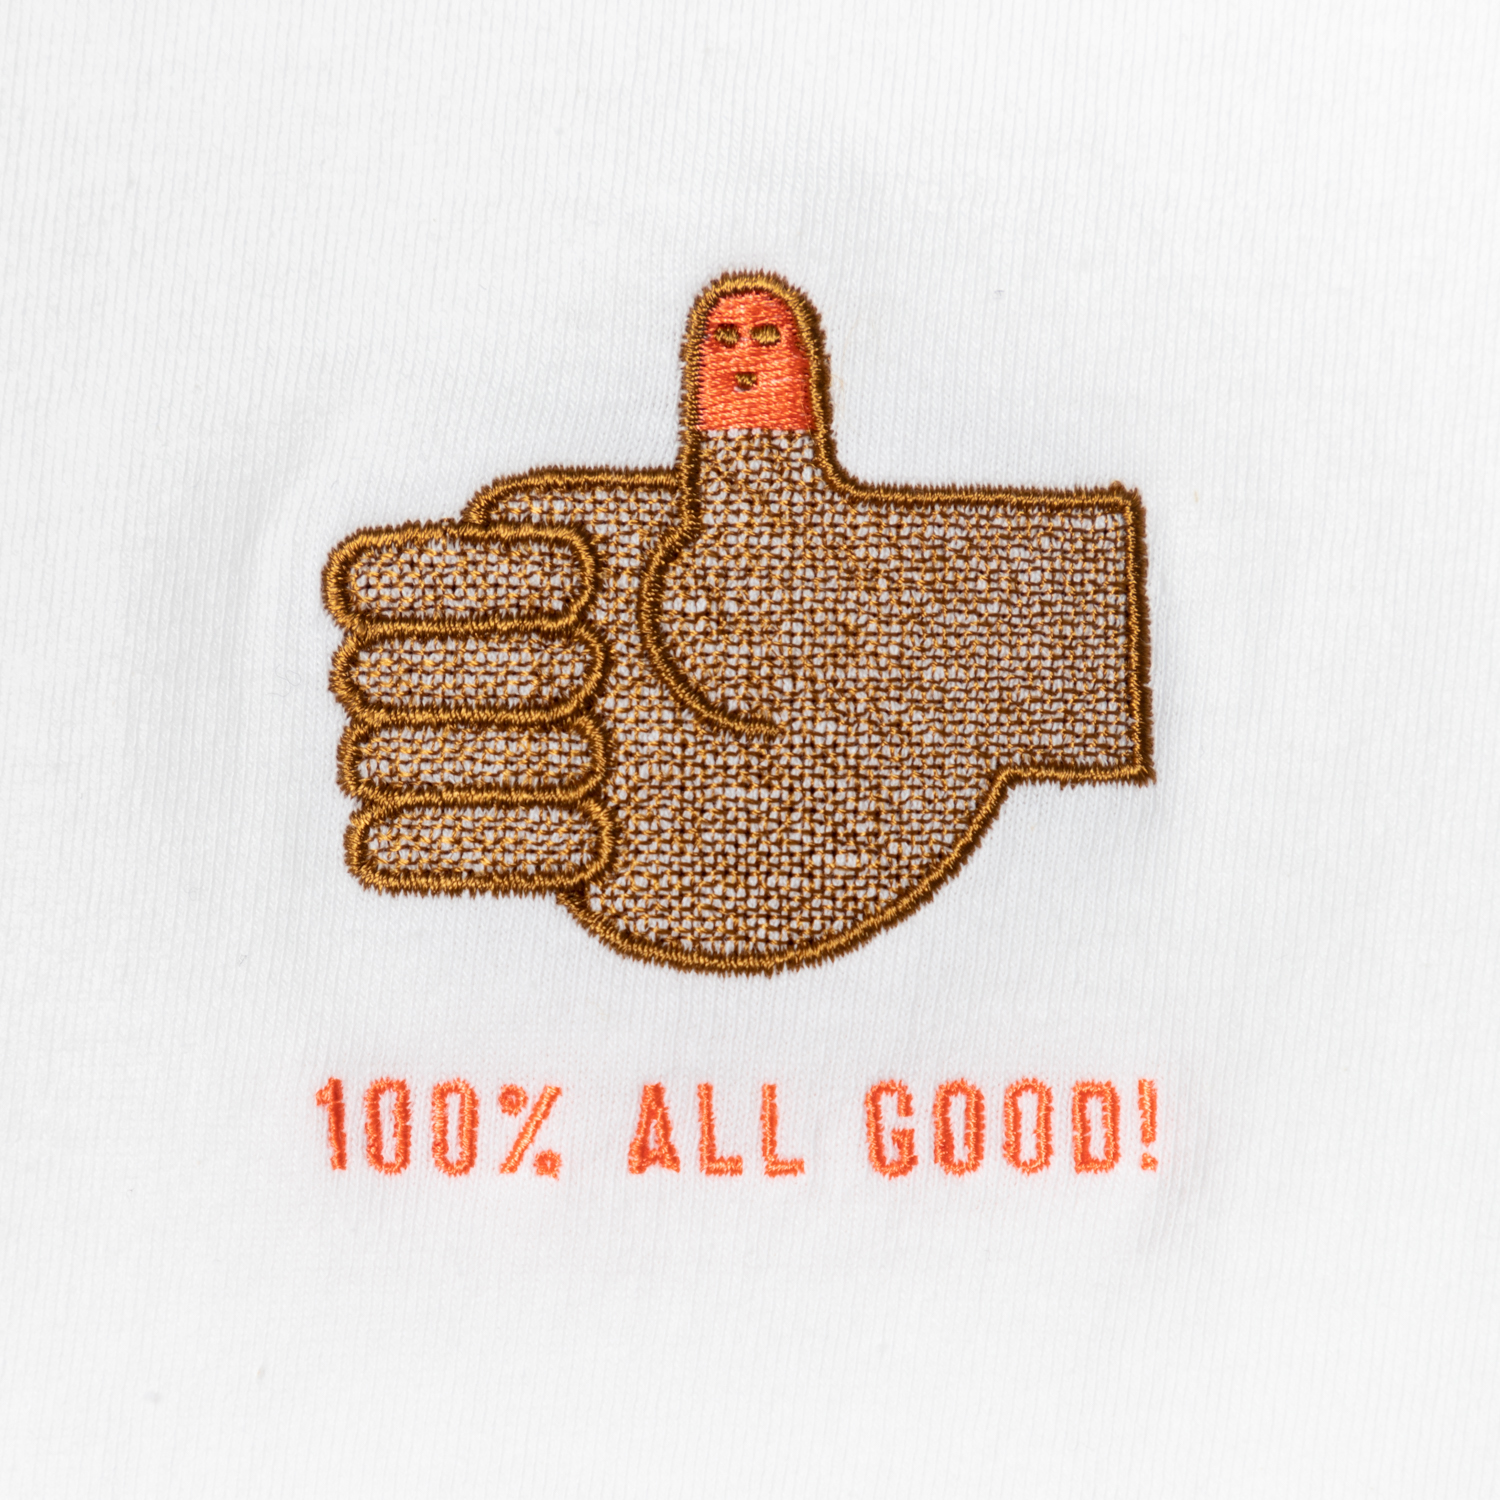 100% ALL GOOD! Embroidery Tee designed by Akinobu Maeda